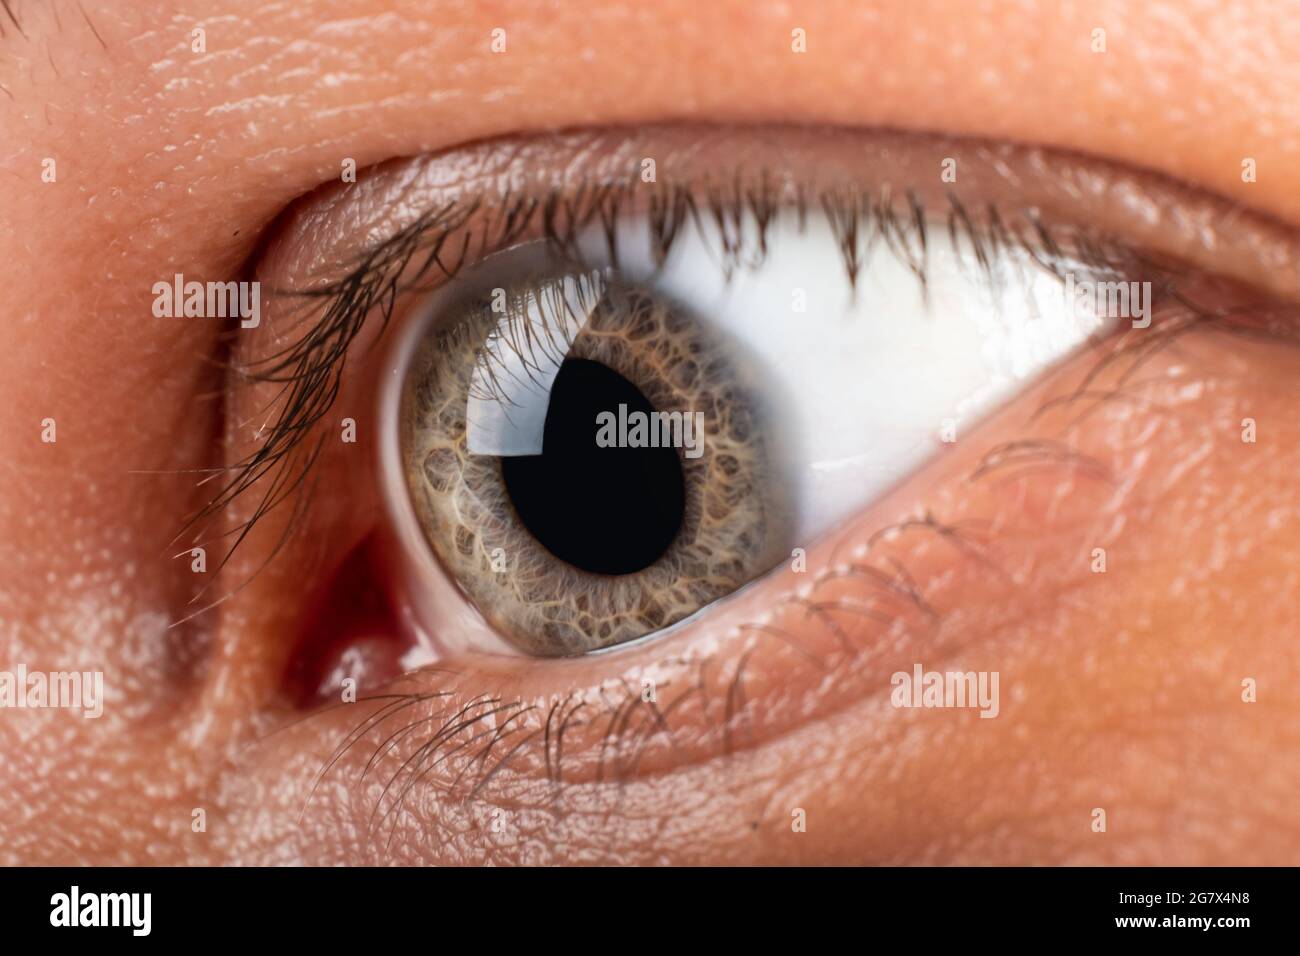 patient with keratokonus eye closeup, corneal dystrophy diagnosis. Stock Photo